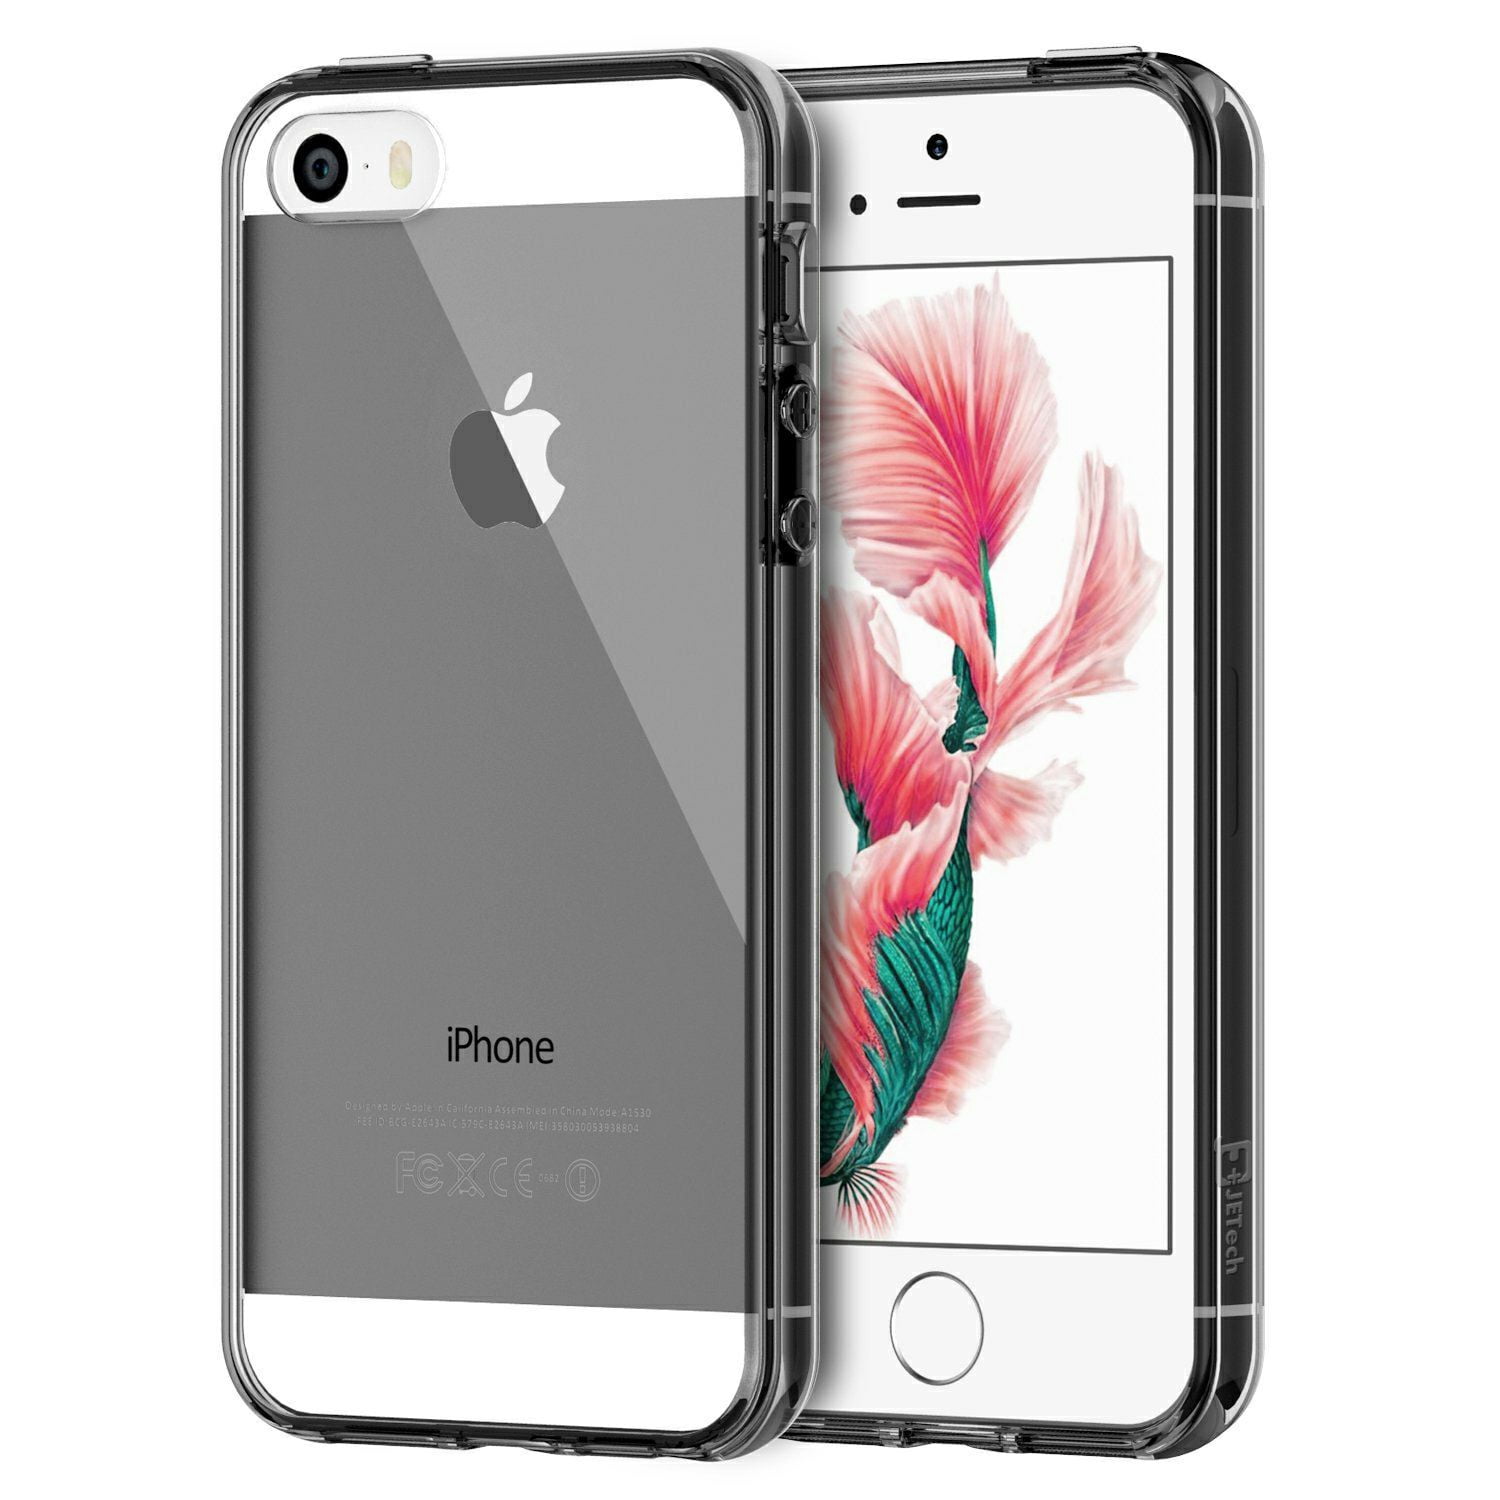 JETech Funda para iPhone SE 2016 (no para 2020), iPhone 5s y iPhone 5, a  prueba de golpes, parte trasera transparente antiarañazos, color gris